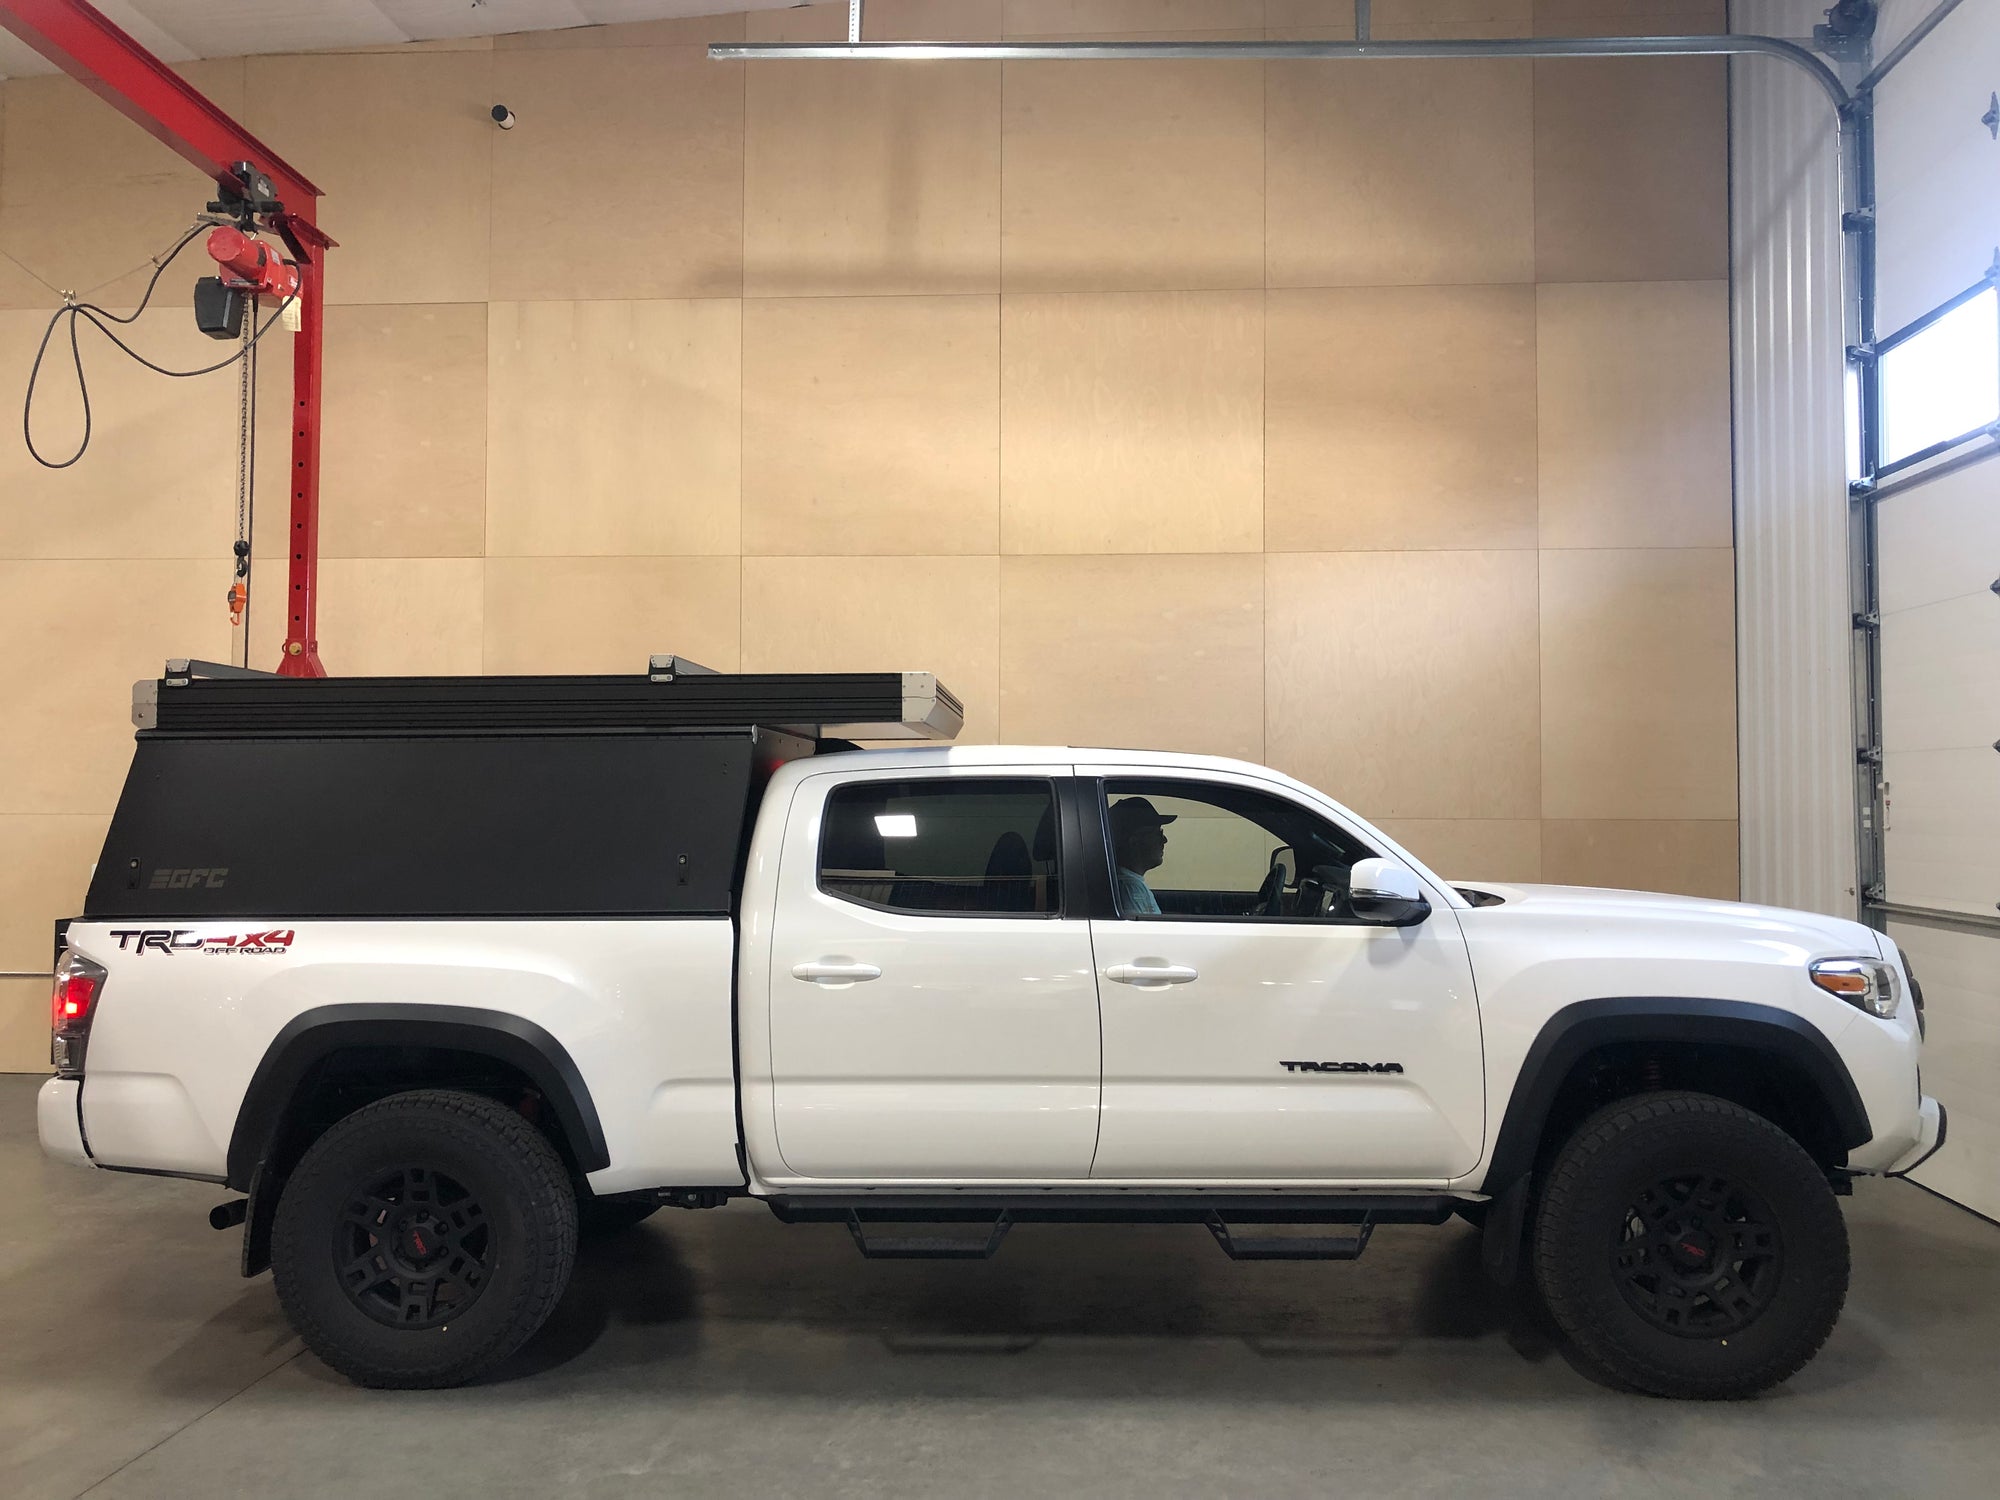 2021 Toyota Tacoma Camper - Build #1693